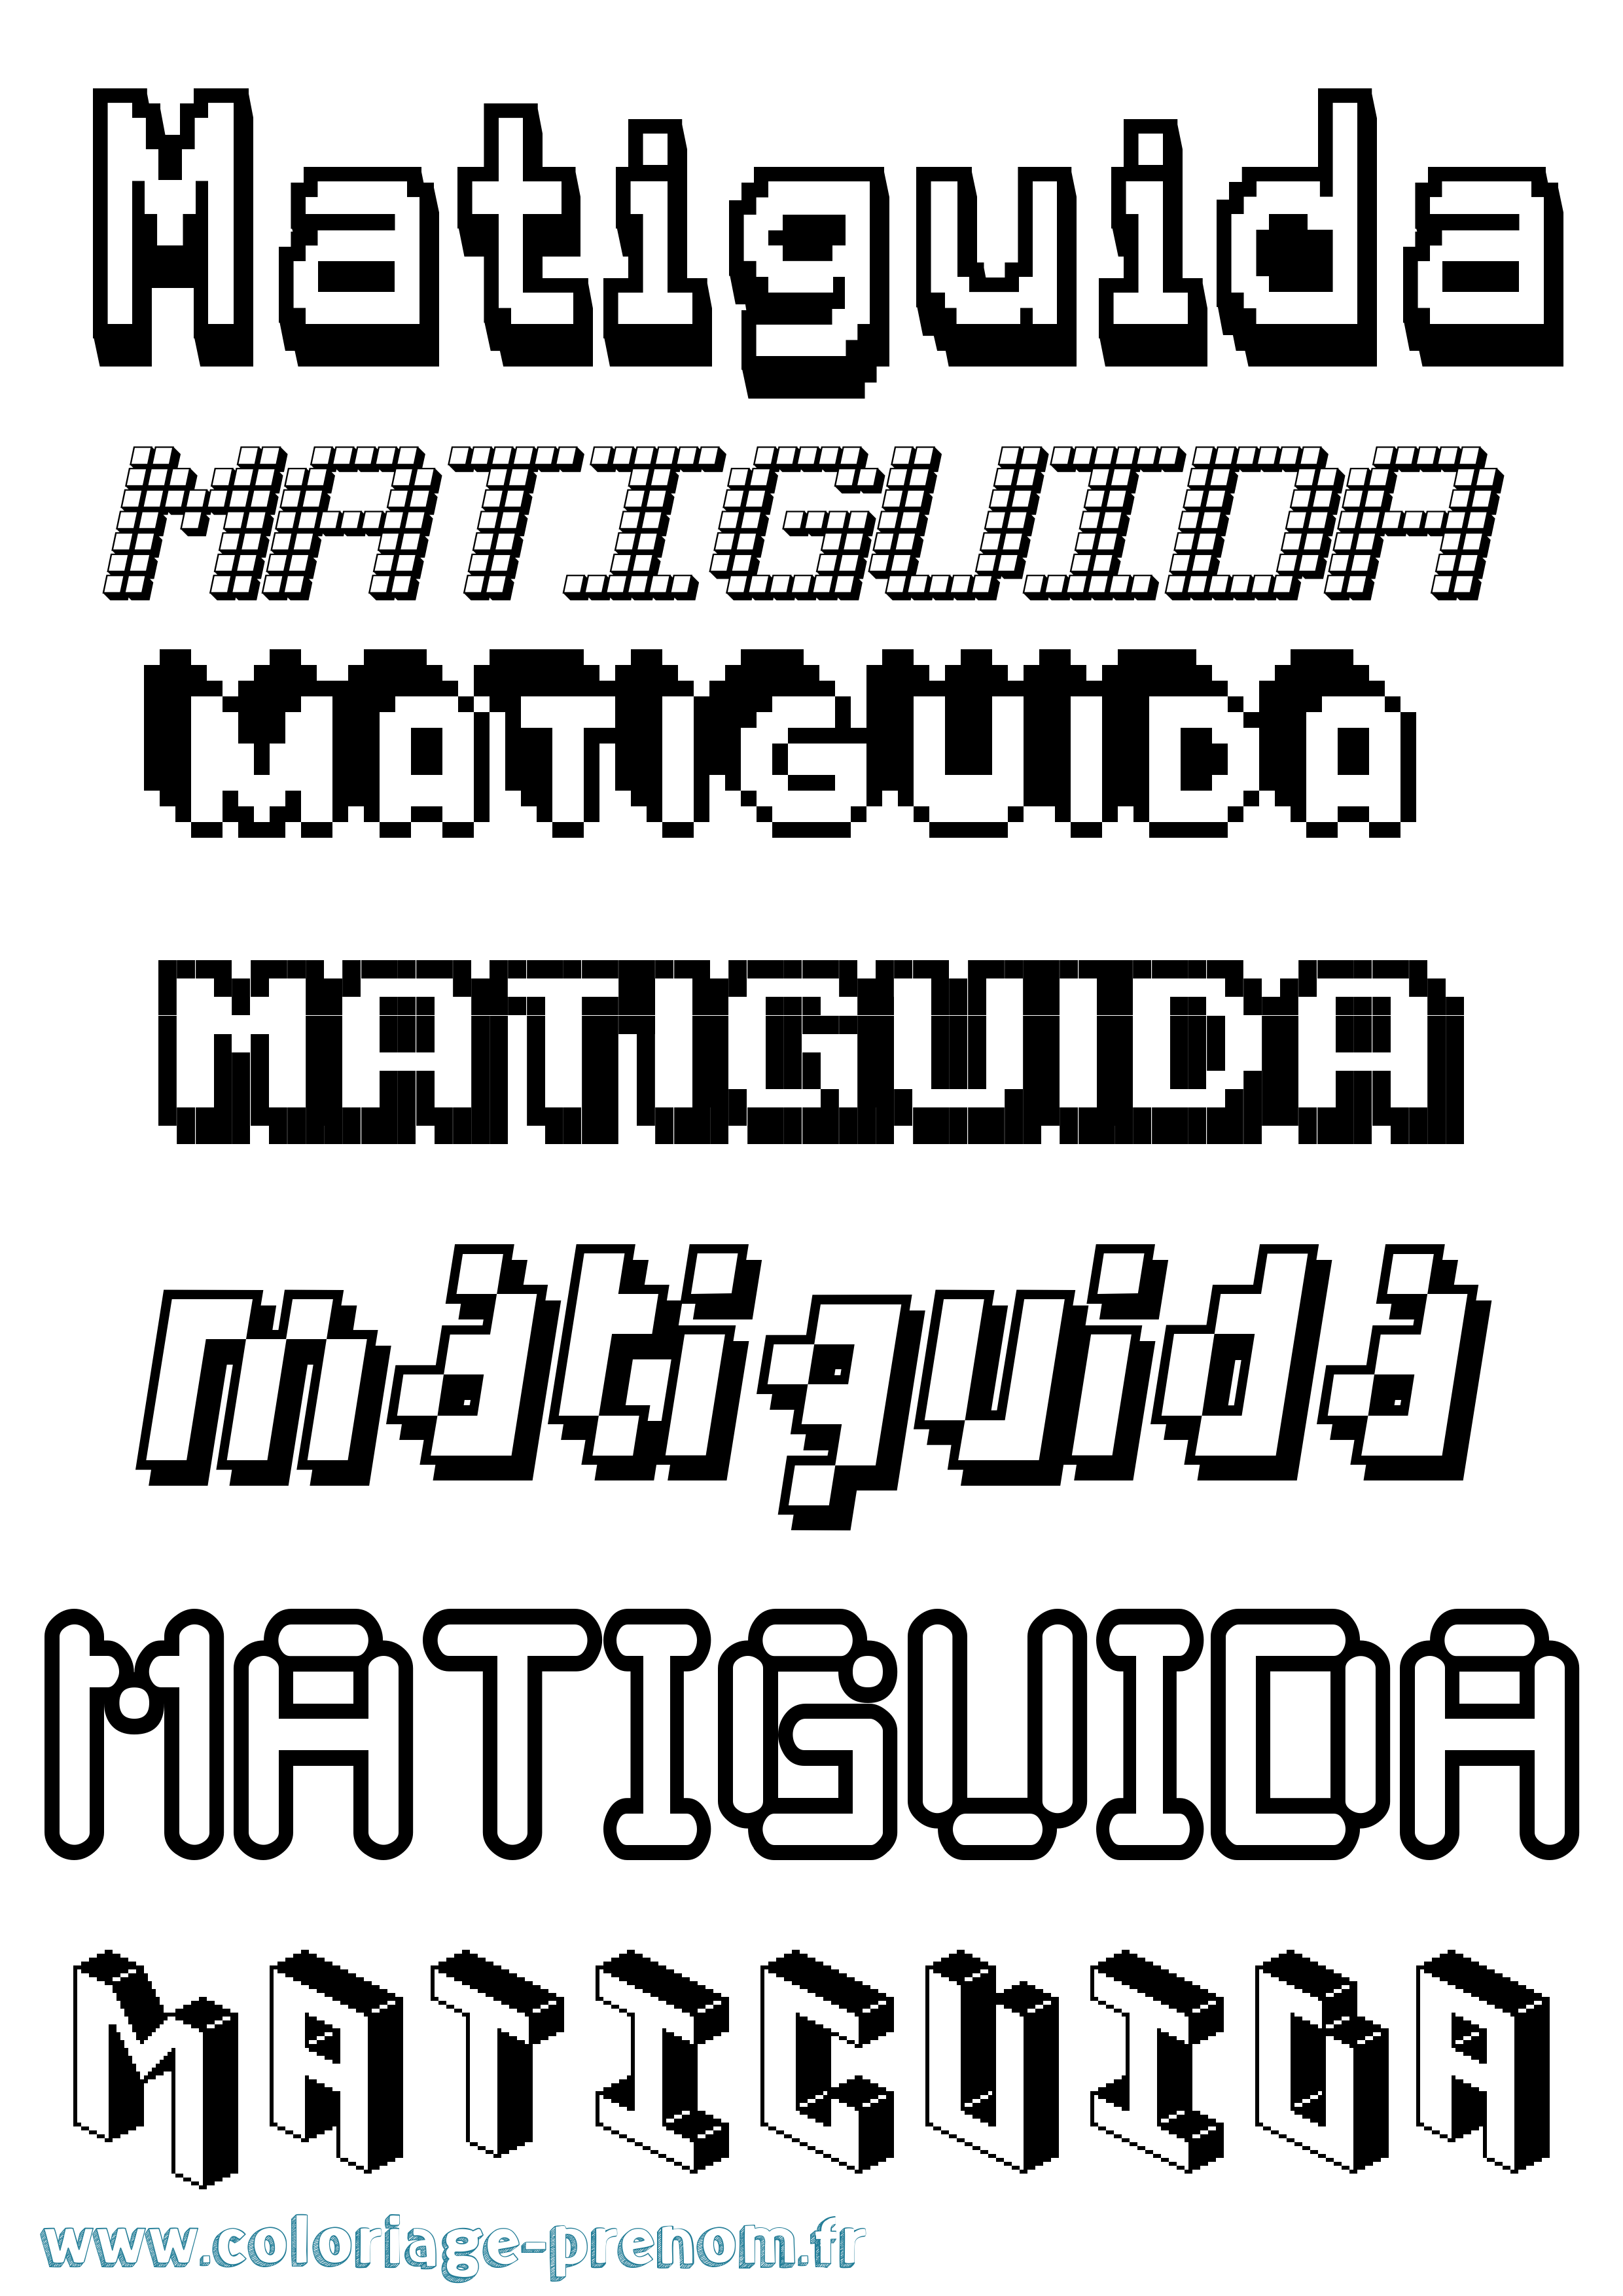 Coloriage prénom Matiguida Pixel